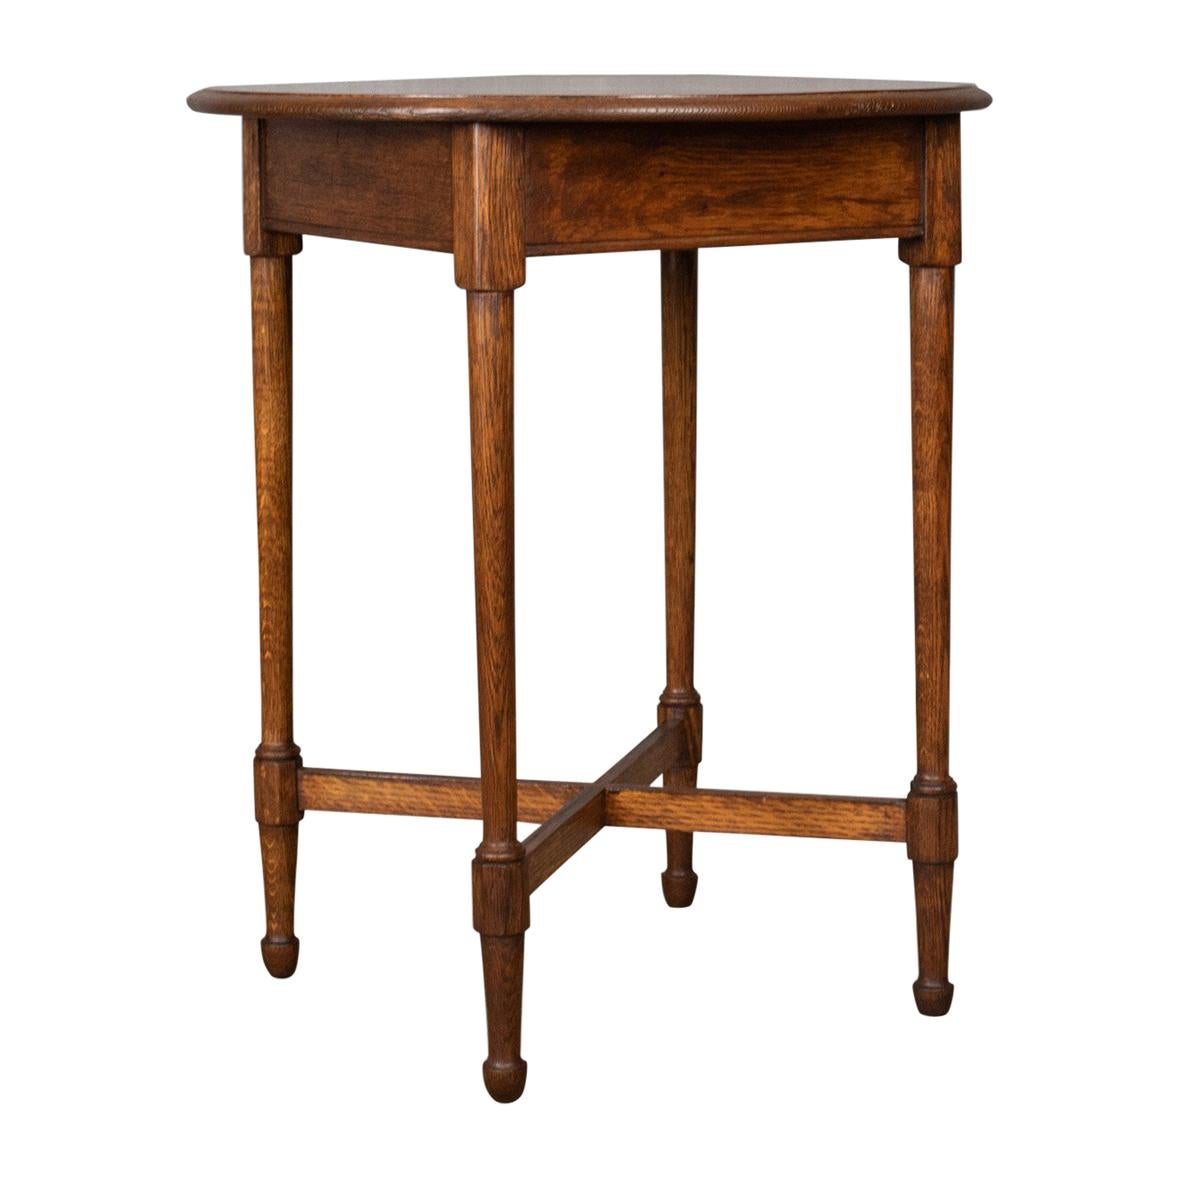 Antique Side Table, English, Edwardian, Oak, Lamp, circa 1910